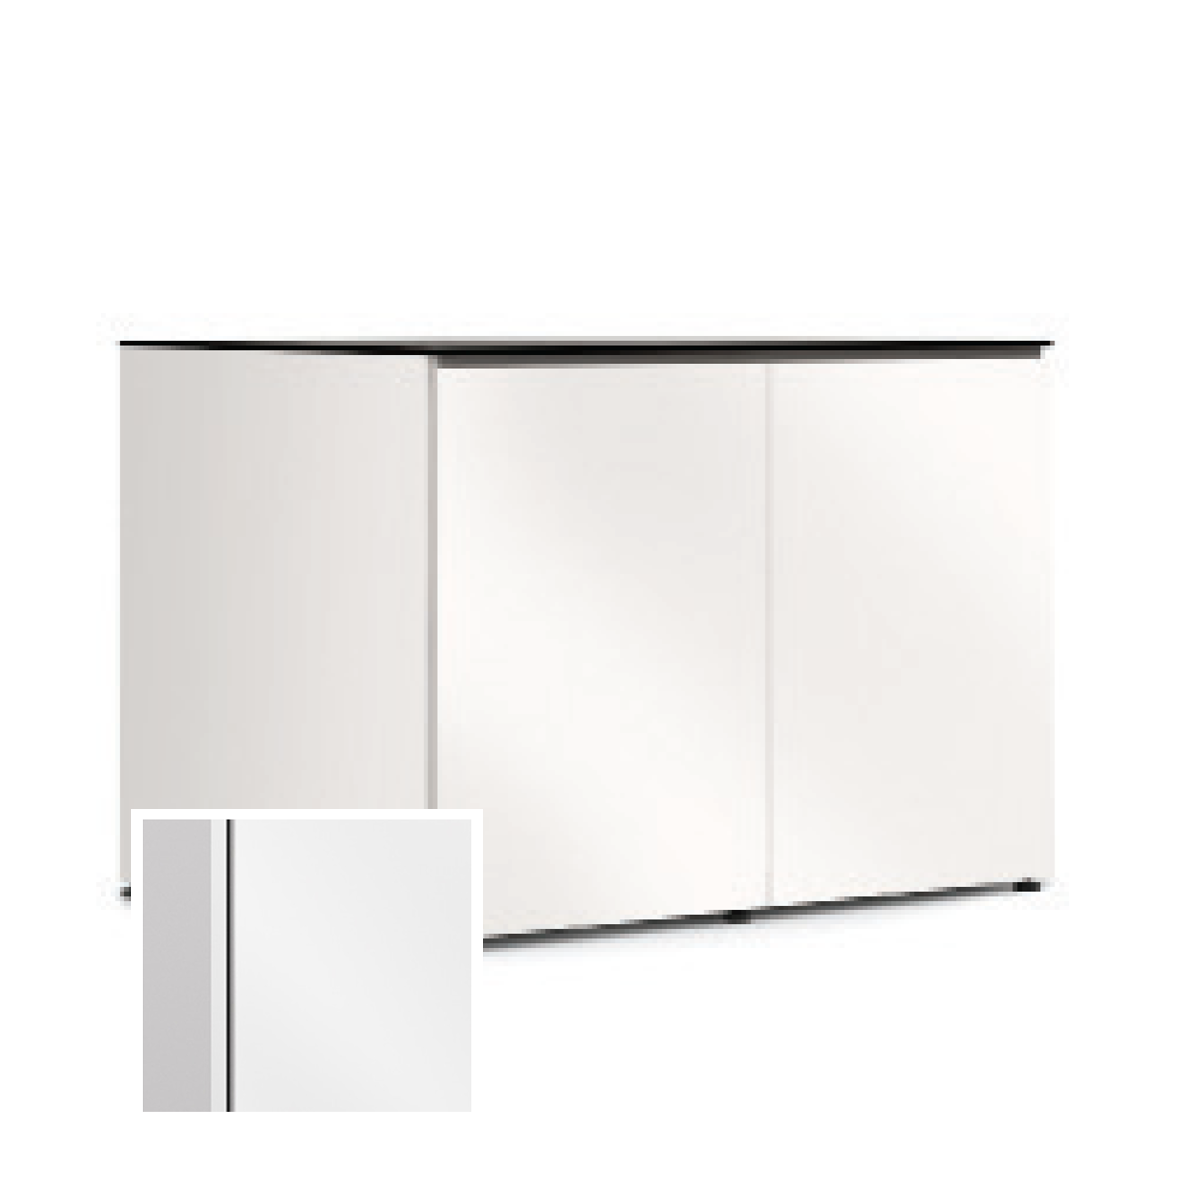 D3/323B/MM/GW 2 Bay, Deep Profile Cabinet - Gloss White/Black Top